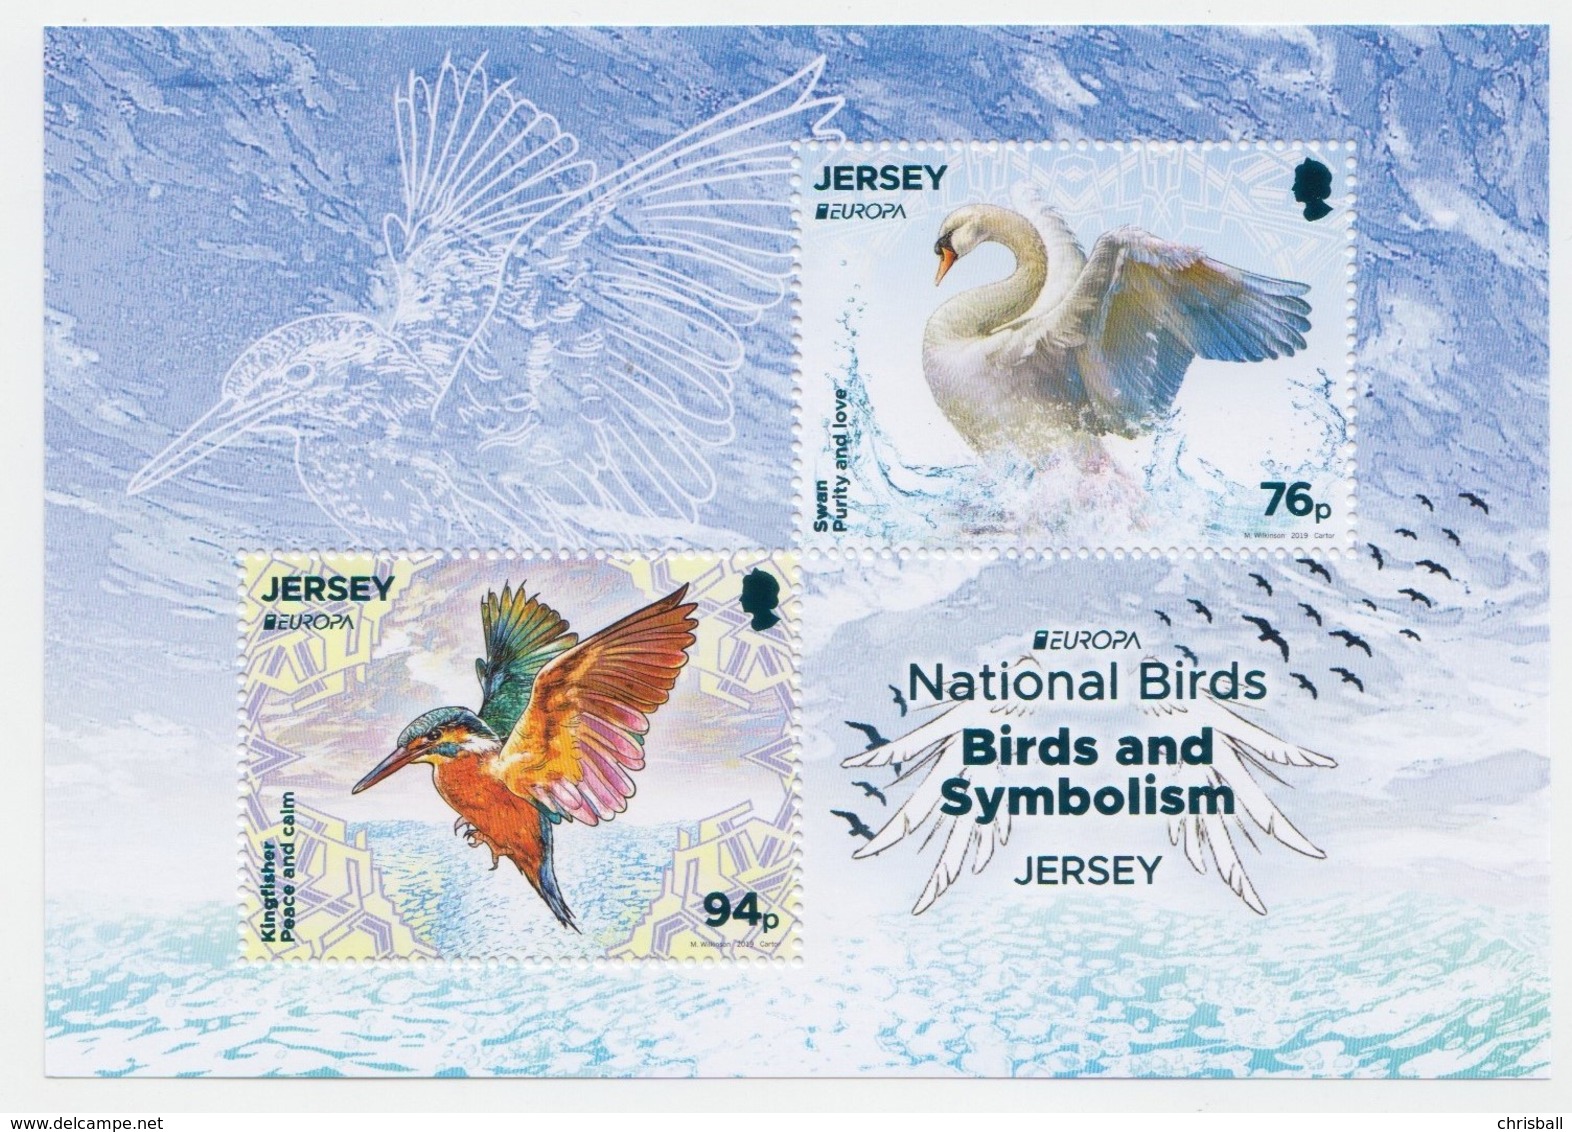 Jersey 2019 - Europa National Birds Miniature Sheet - Unmounted Mint NHM - Jersey